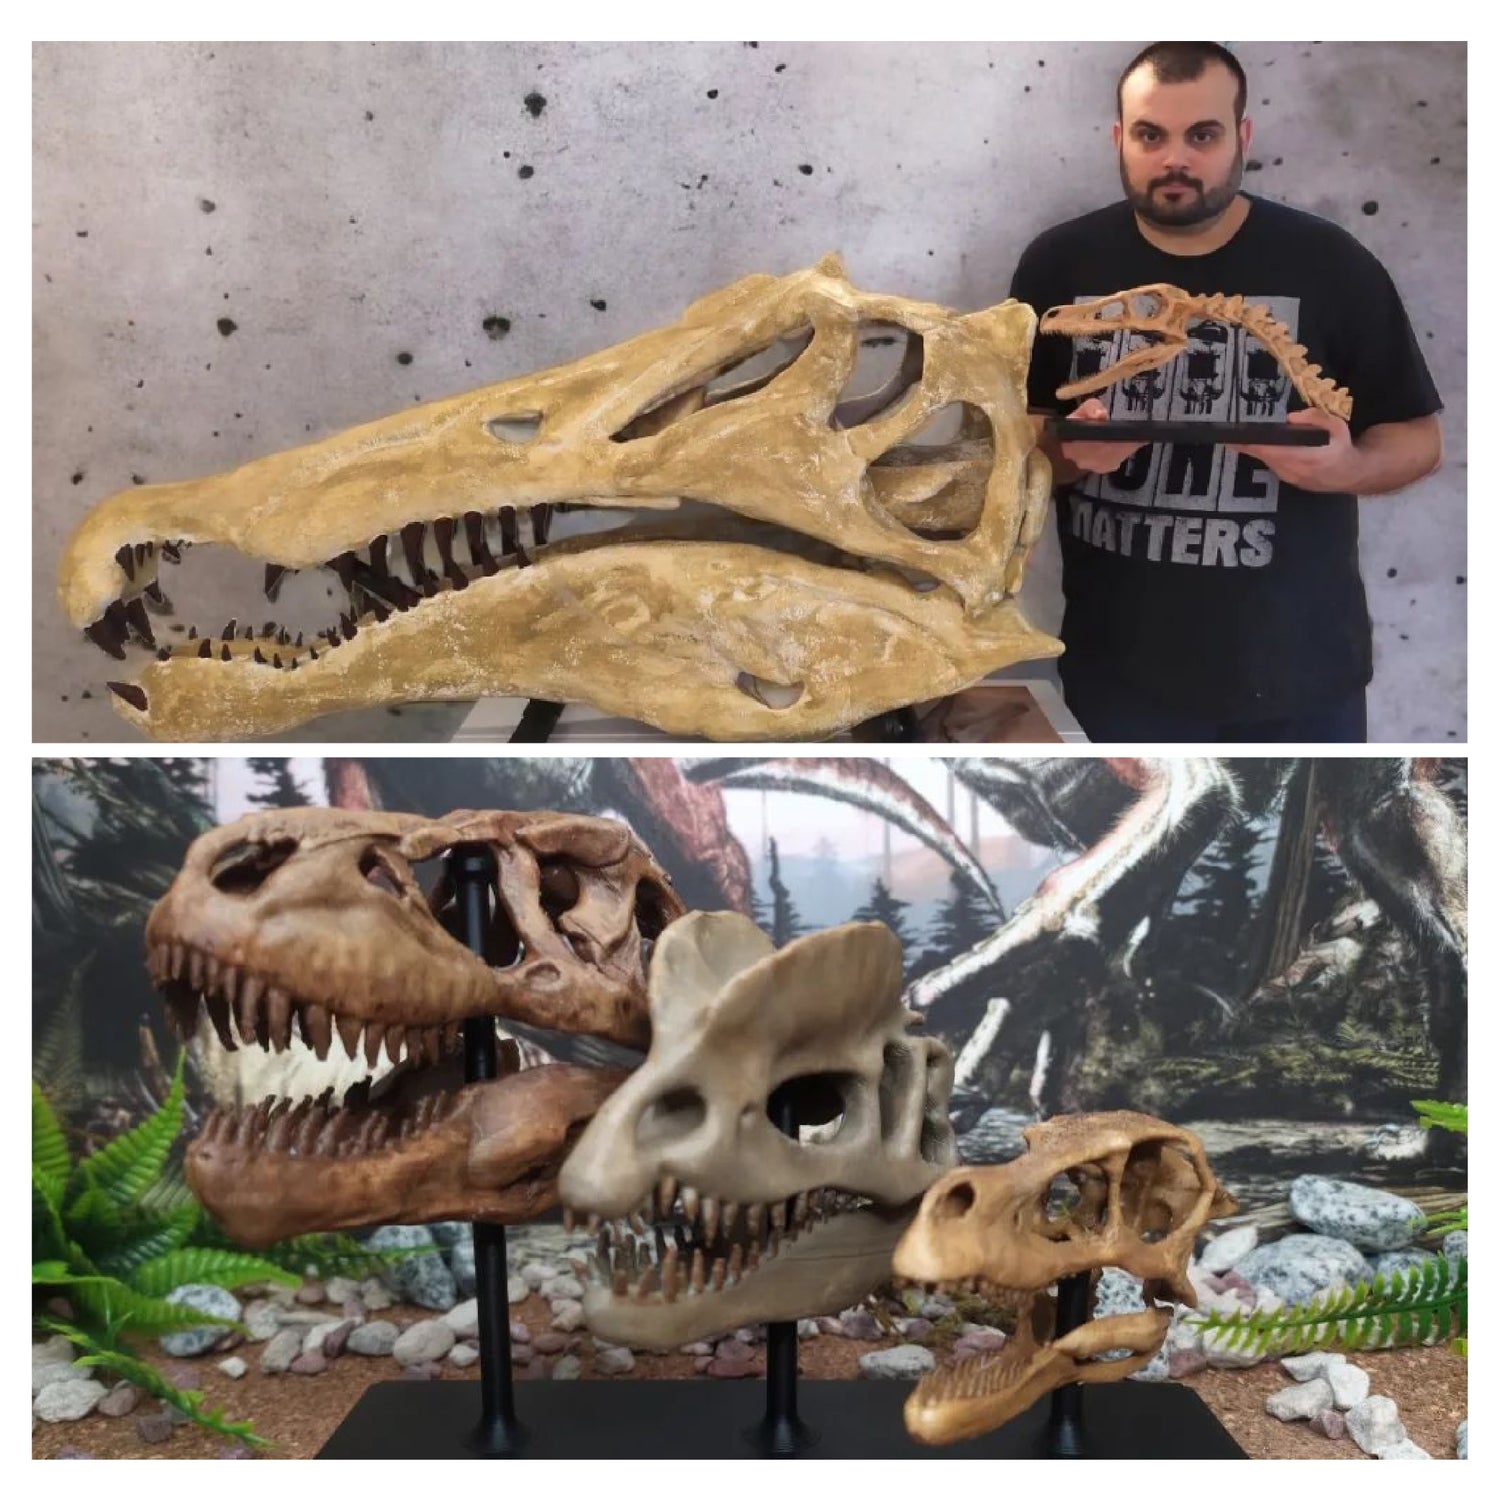 Dinosaur Fossil Printing Enthusiast: A Good Friend of FLSUN Italy